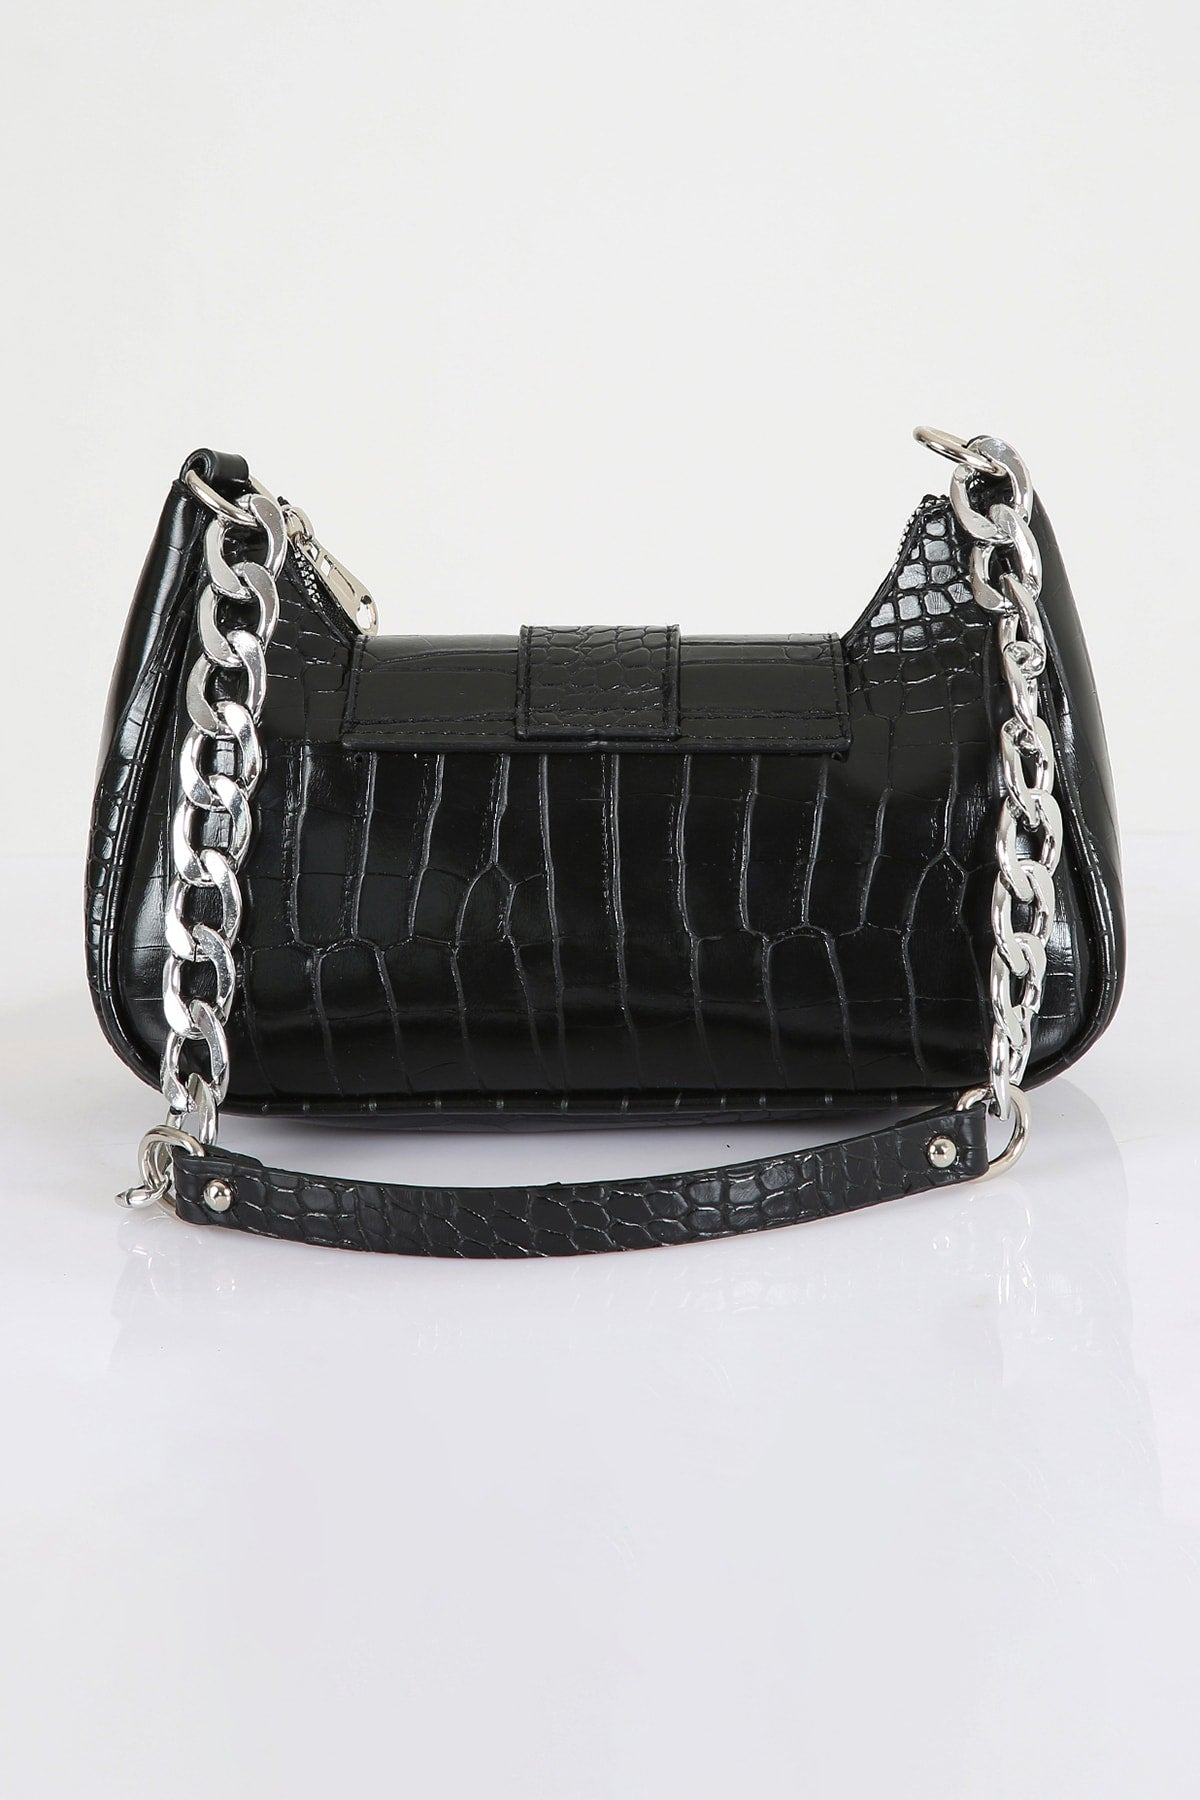 Crocodile Patterned Black Handbag with Bony Staples